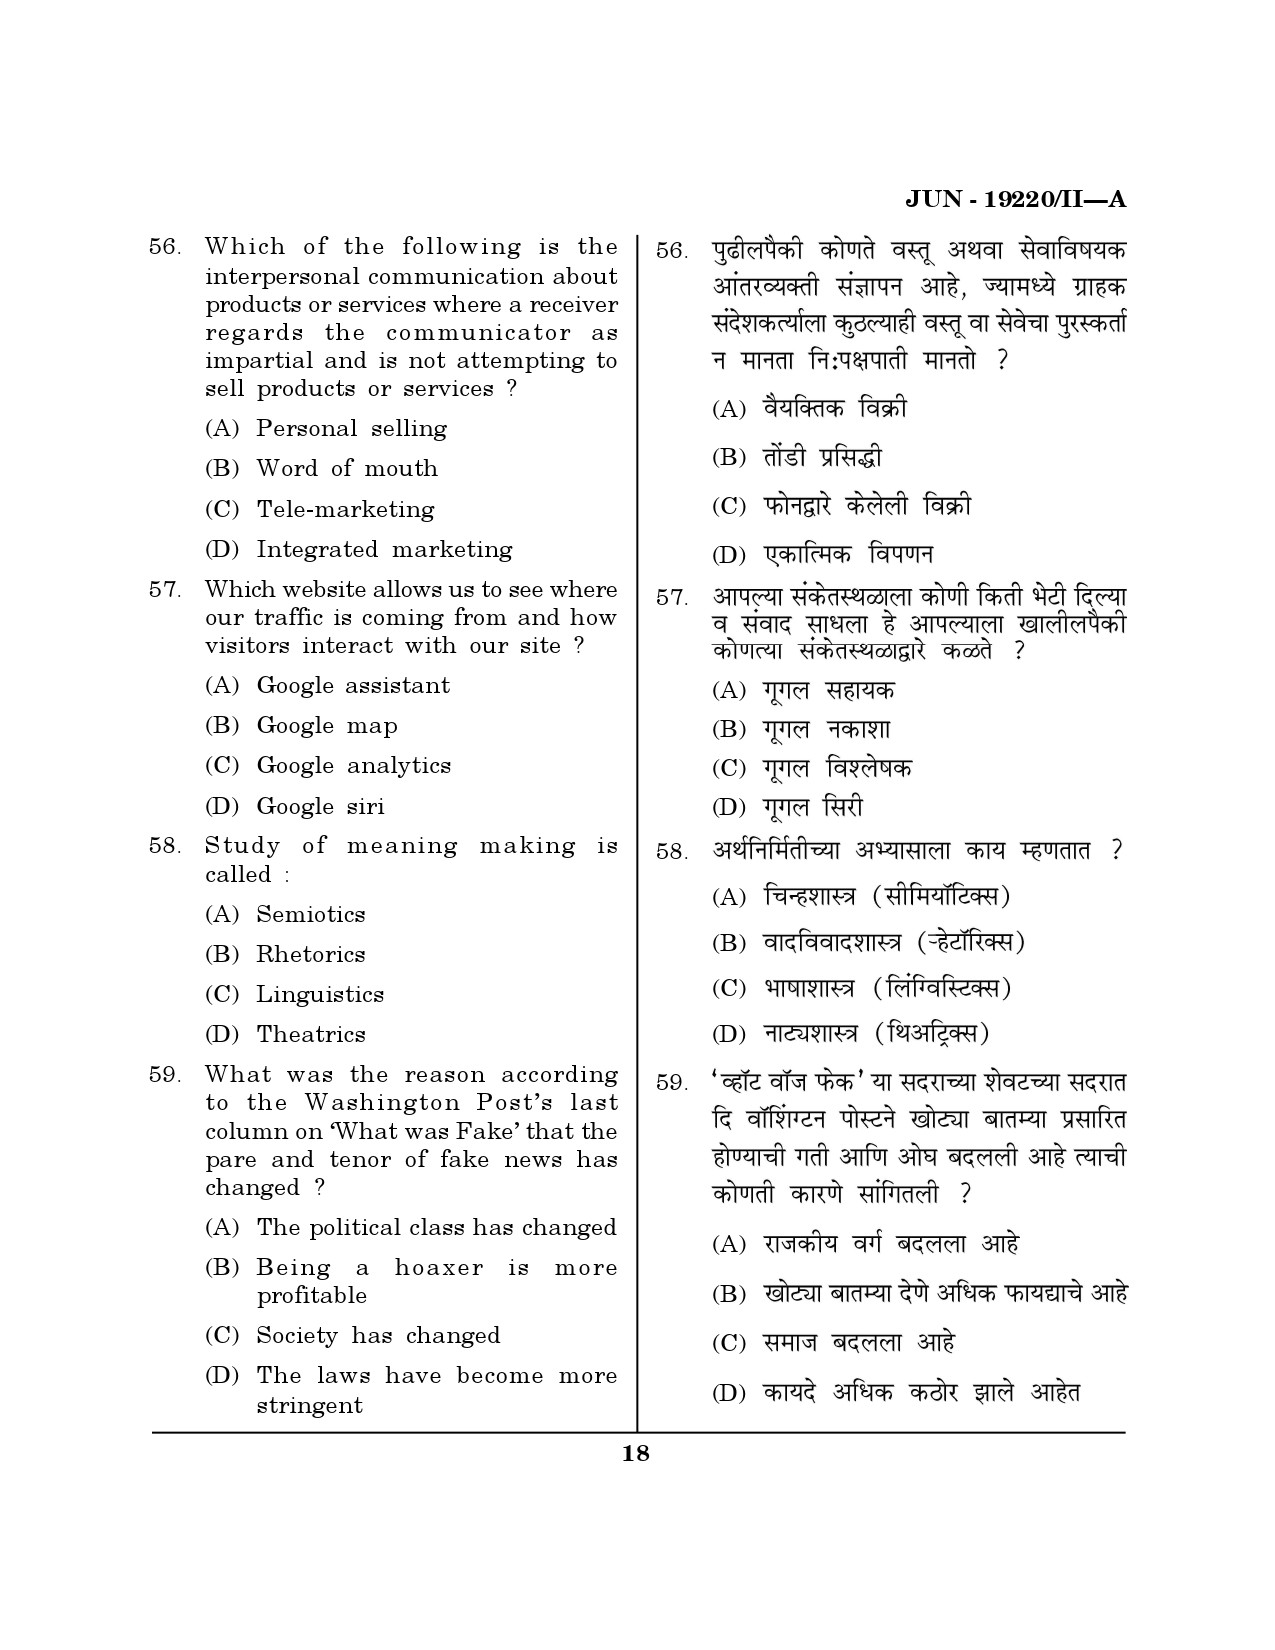 Maharashtra SET Journalism and Mass Communication Question Paper II June 2020 17